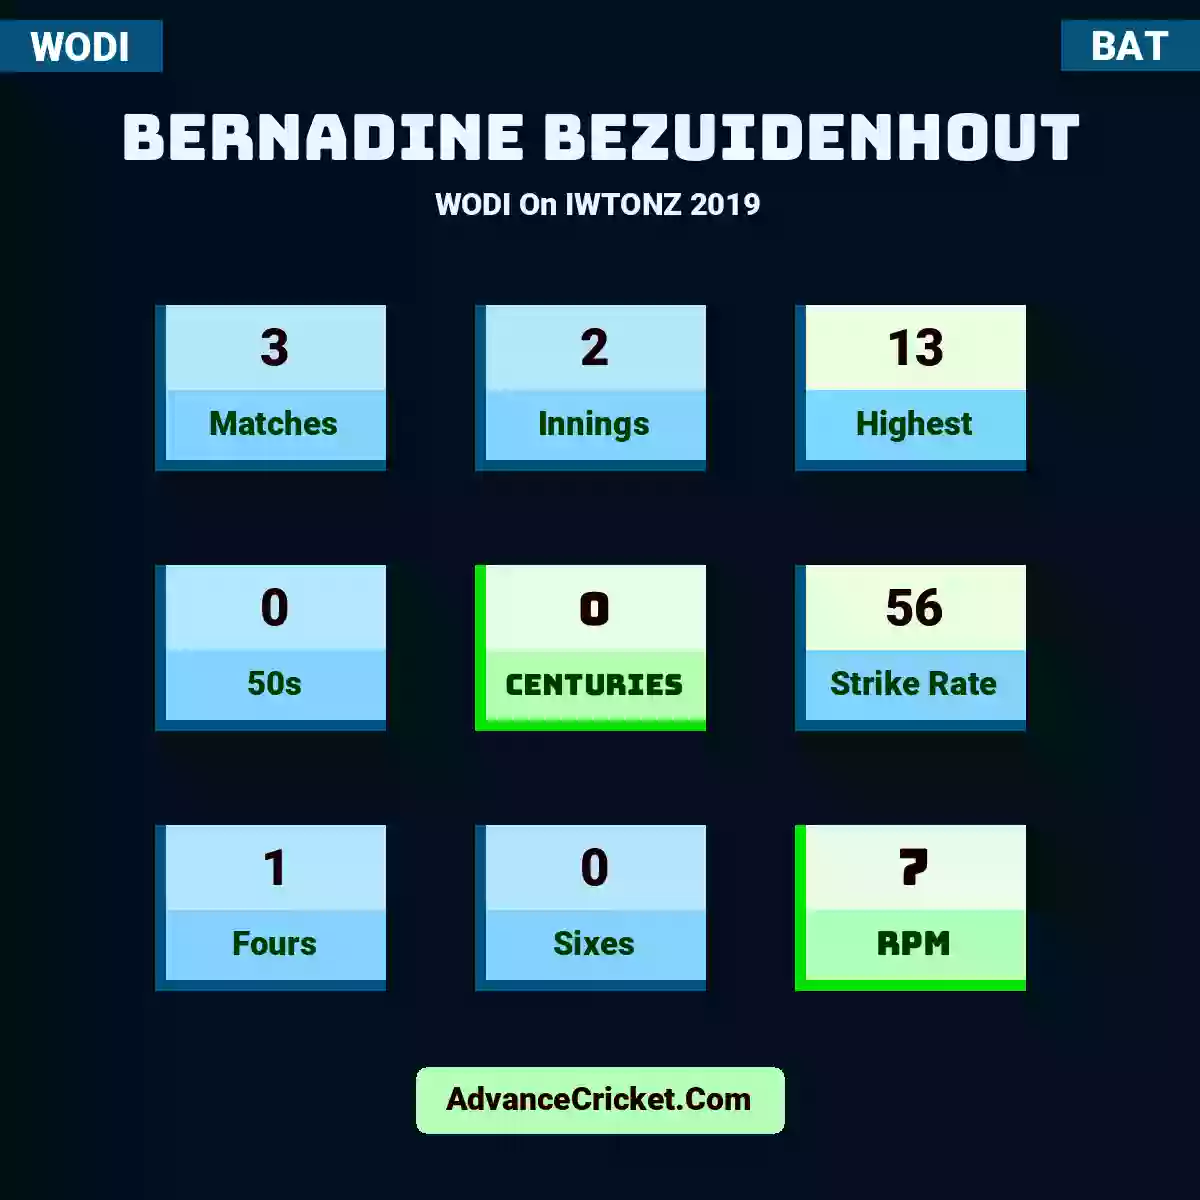 Bernadine Bezuidenhout WODI  On IWTONZ 2019, Bernadine Bezuidenhout played 3 matches, scored 13 runs as highest, 0 half-centuries, and 0 centuries, with a strike rate of 56. B.Bezuidenhout hit 1 fours and 0 sixes, with an RPM of 7.